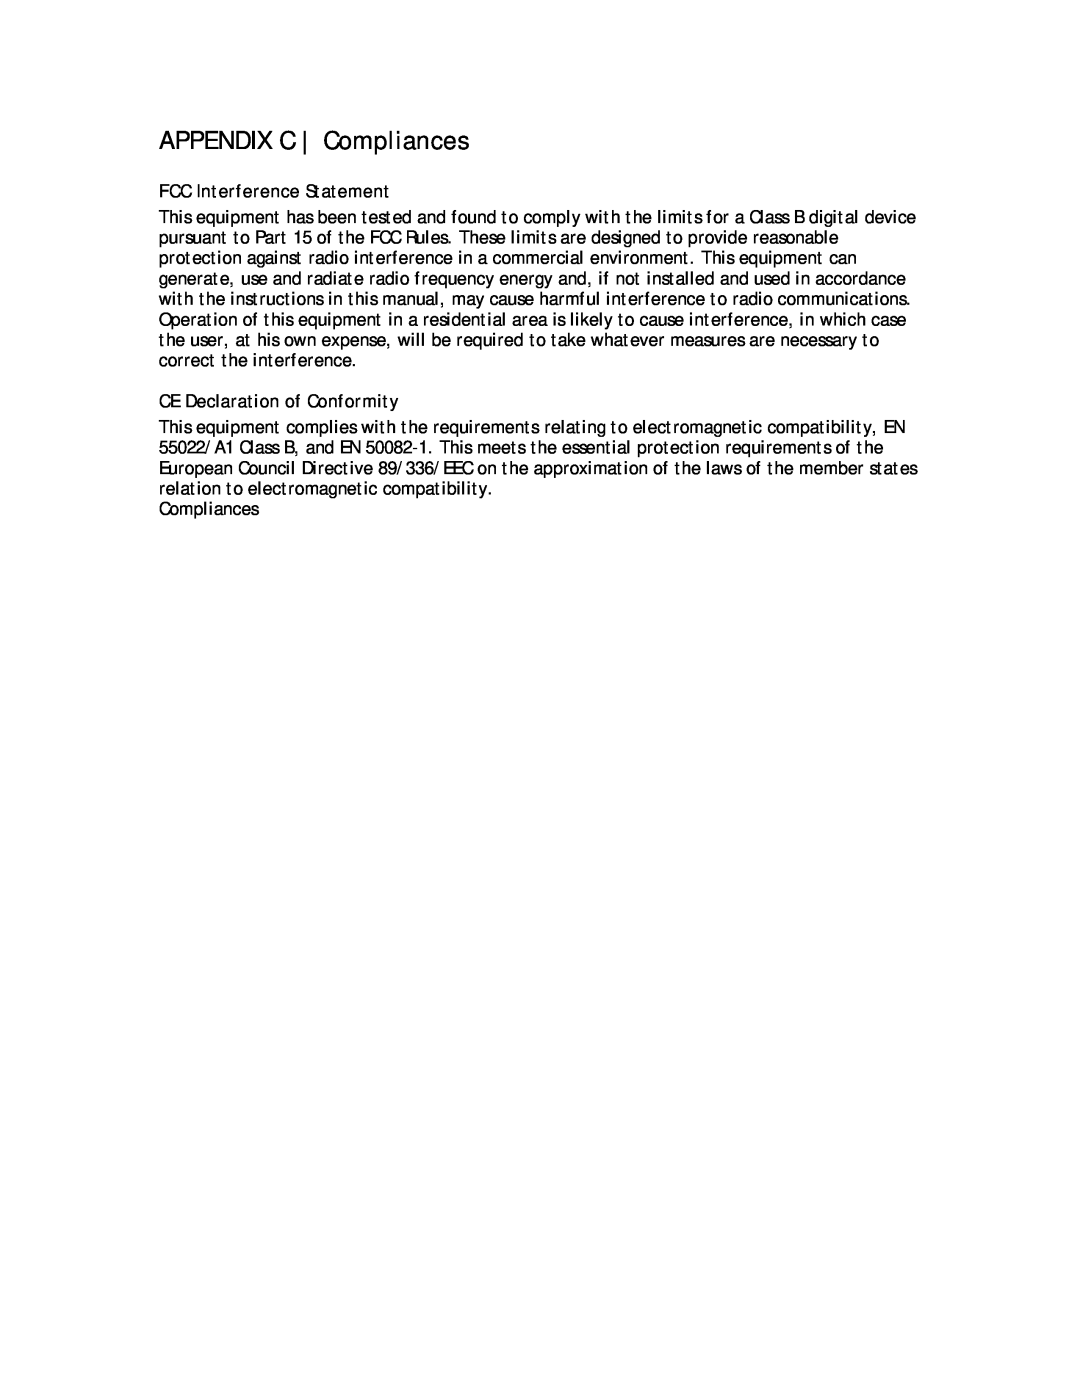 SMC Networks SMC8013WG manual APPENDIX C Compliances, FCC Interference Statement, CE Declaration of Conformity 